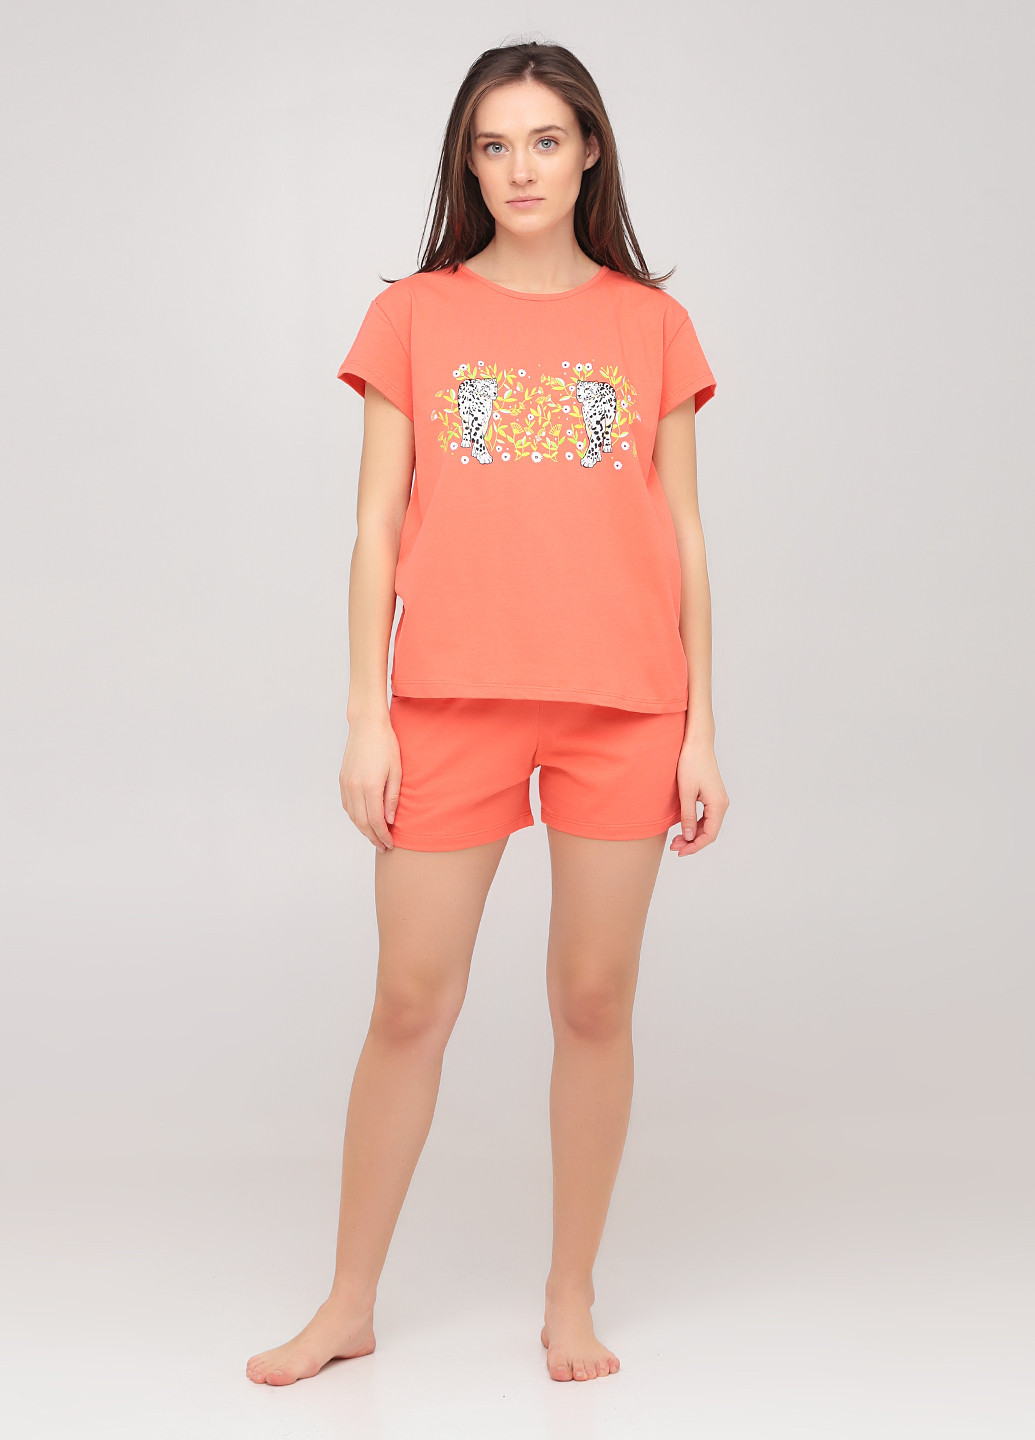 Коралловая всесезон пижама (футболка, шорты) футболка + шорты Lucci